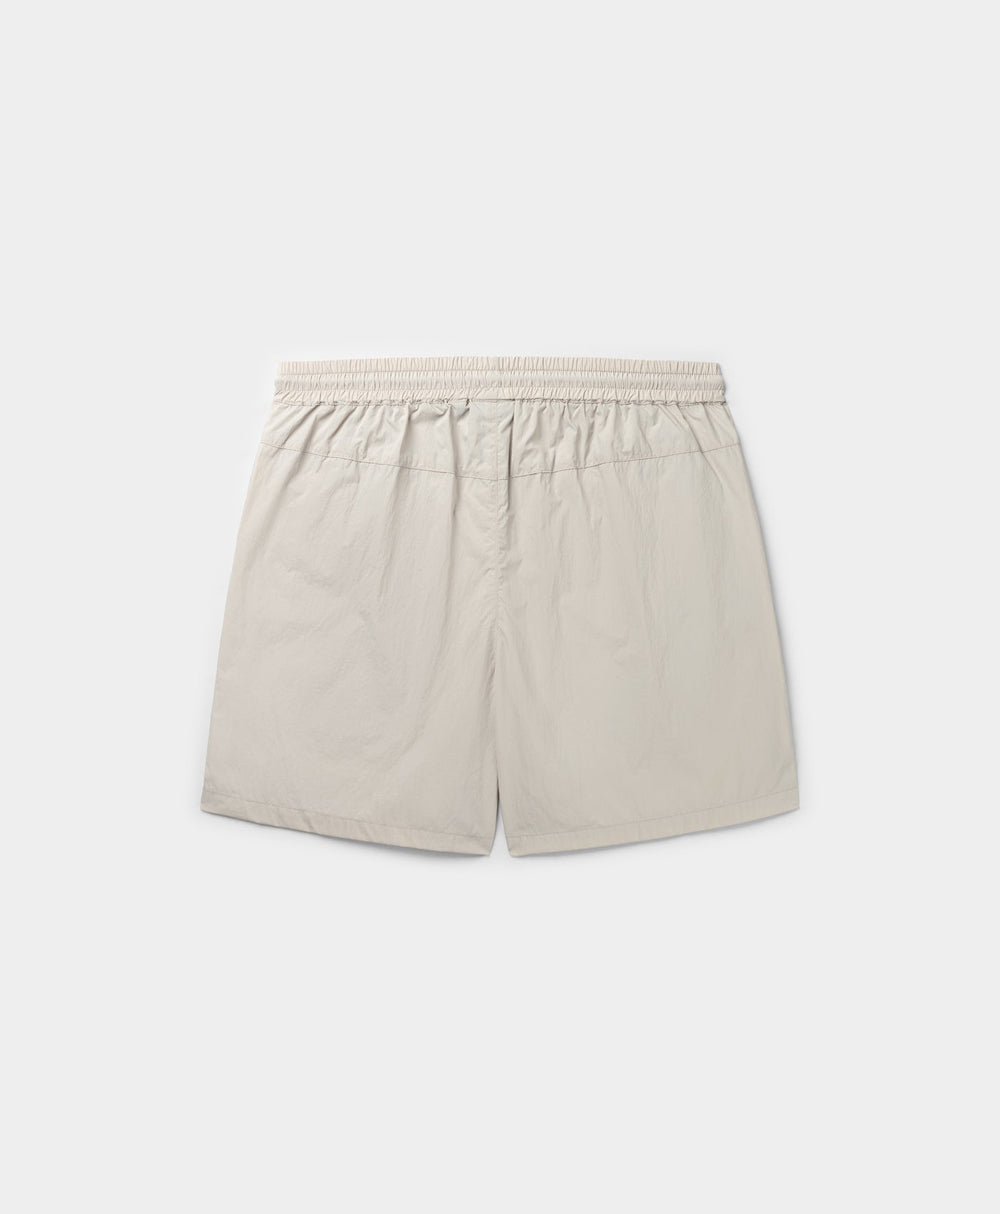 DP - Moonstruck Grey Mehani Shorts - Packshot - Rear